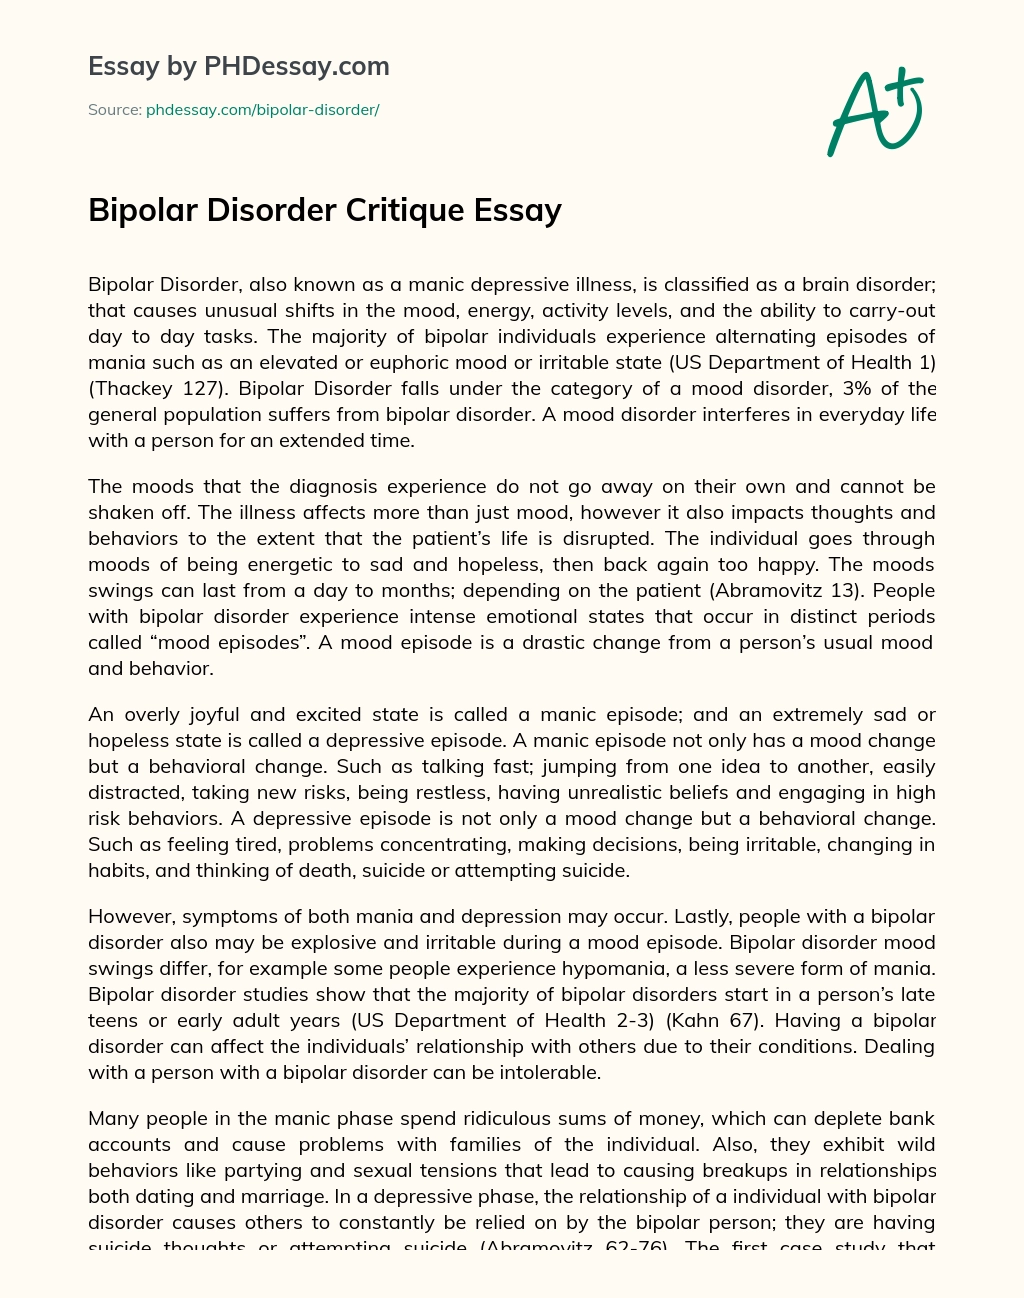 Bipolar Disorder Critique Essay essay